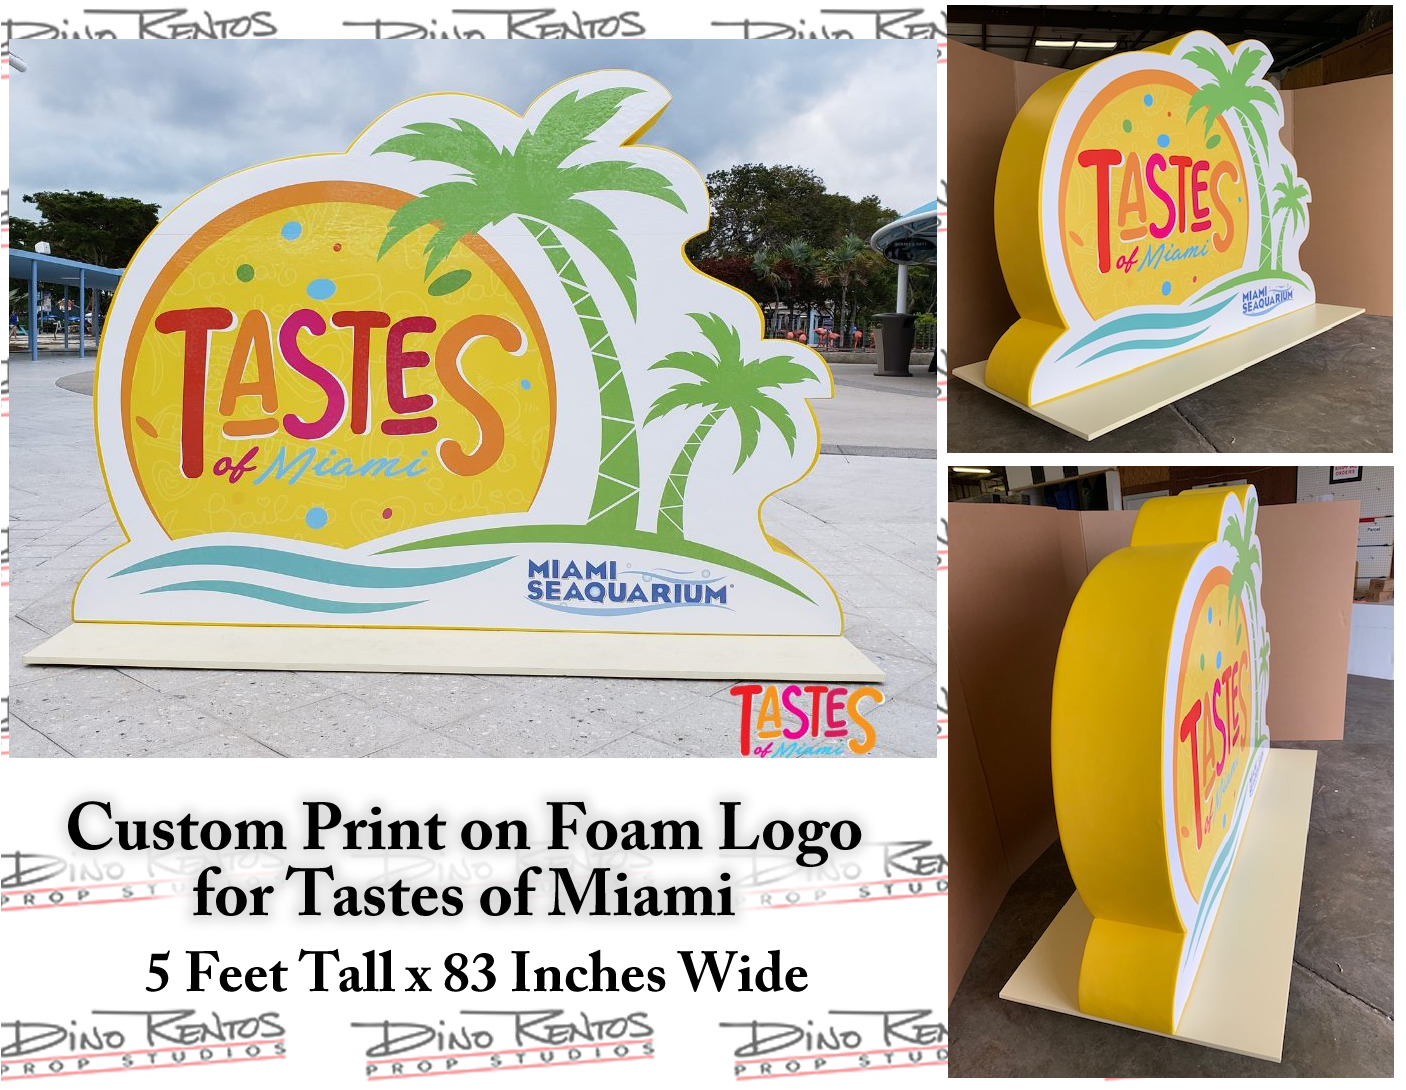 Print on Foam Logo for Tastes of Miami Event